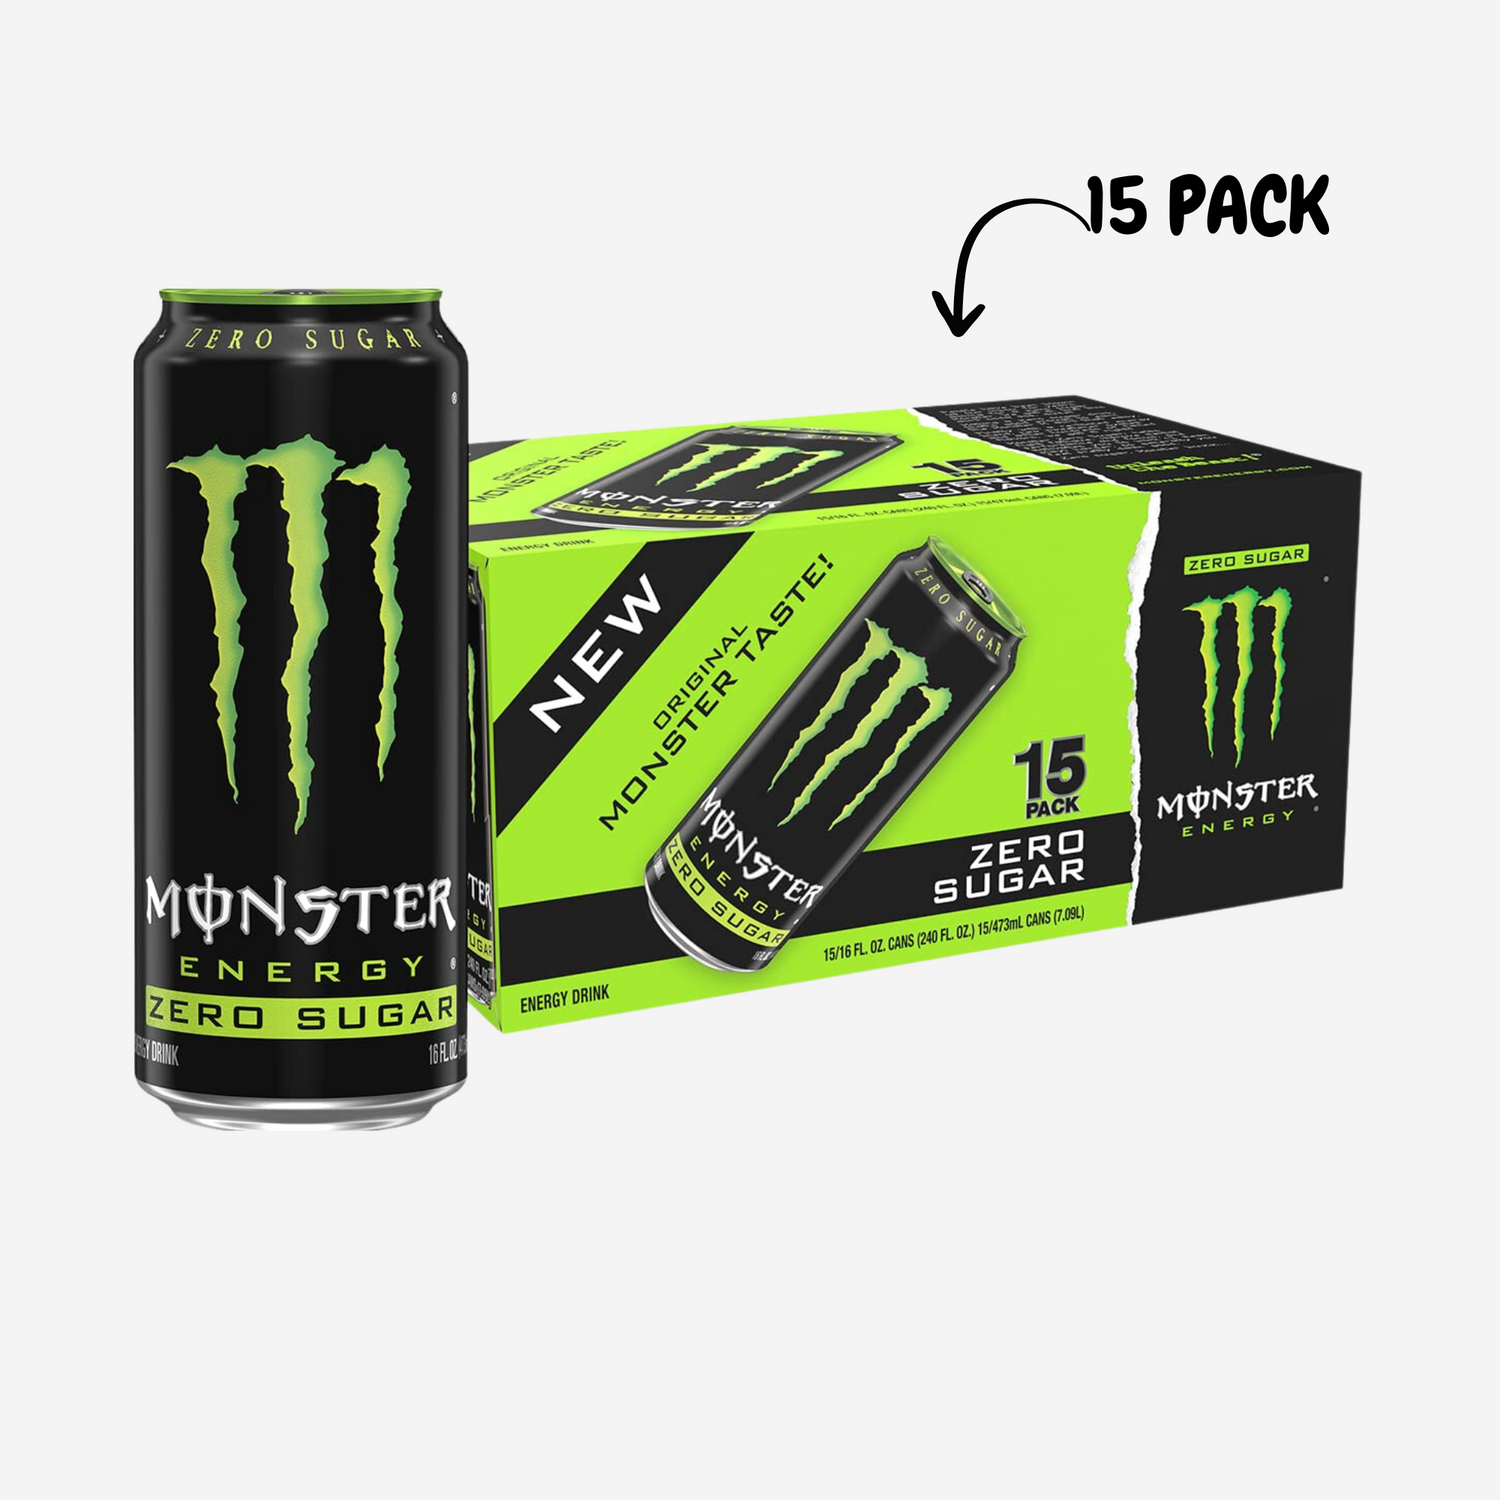 Monster Energy Zero Sugar, Green, Original, Low Calorie Energy Drink, 16 Fl Oz (Pack of 15)